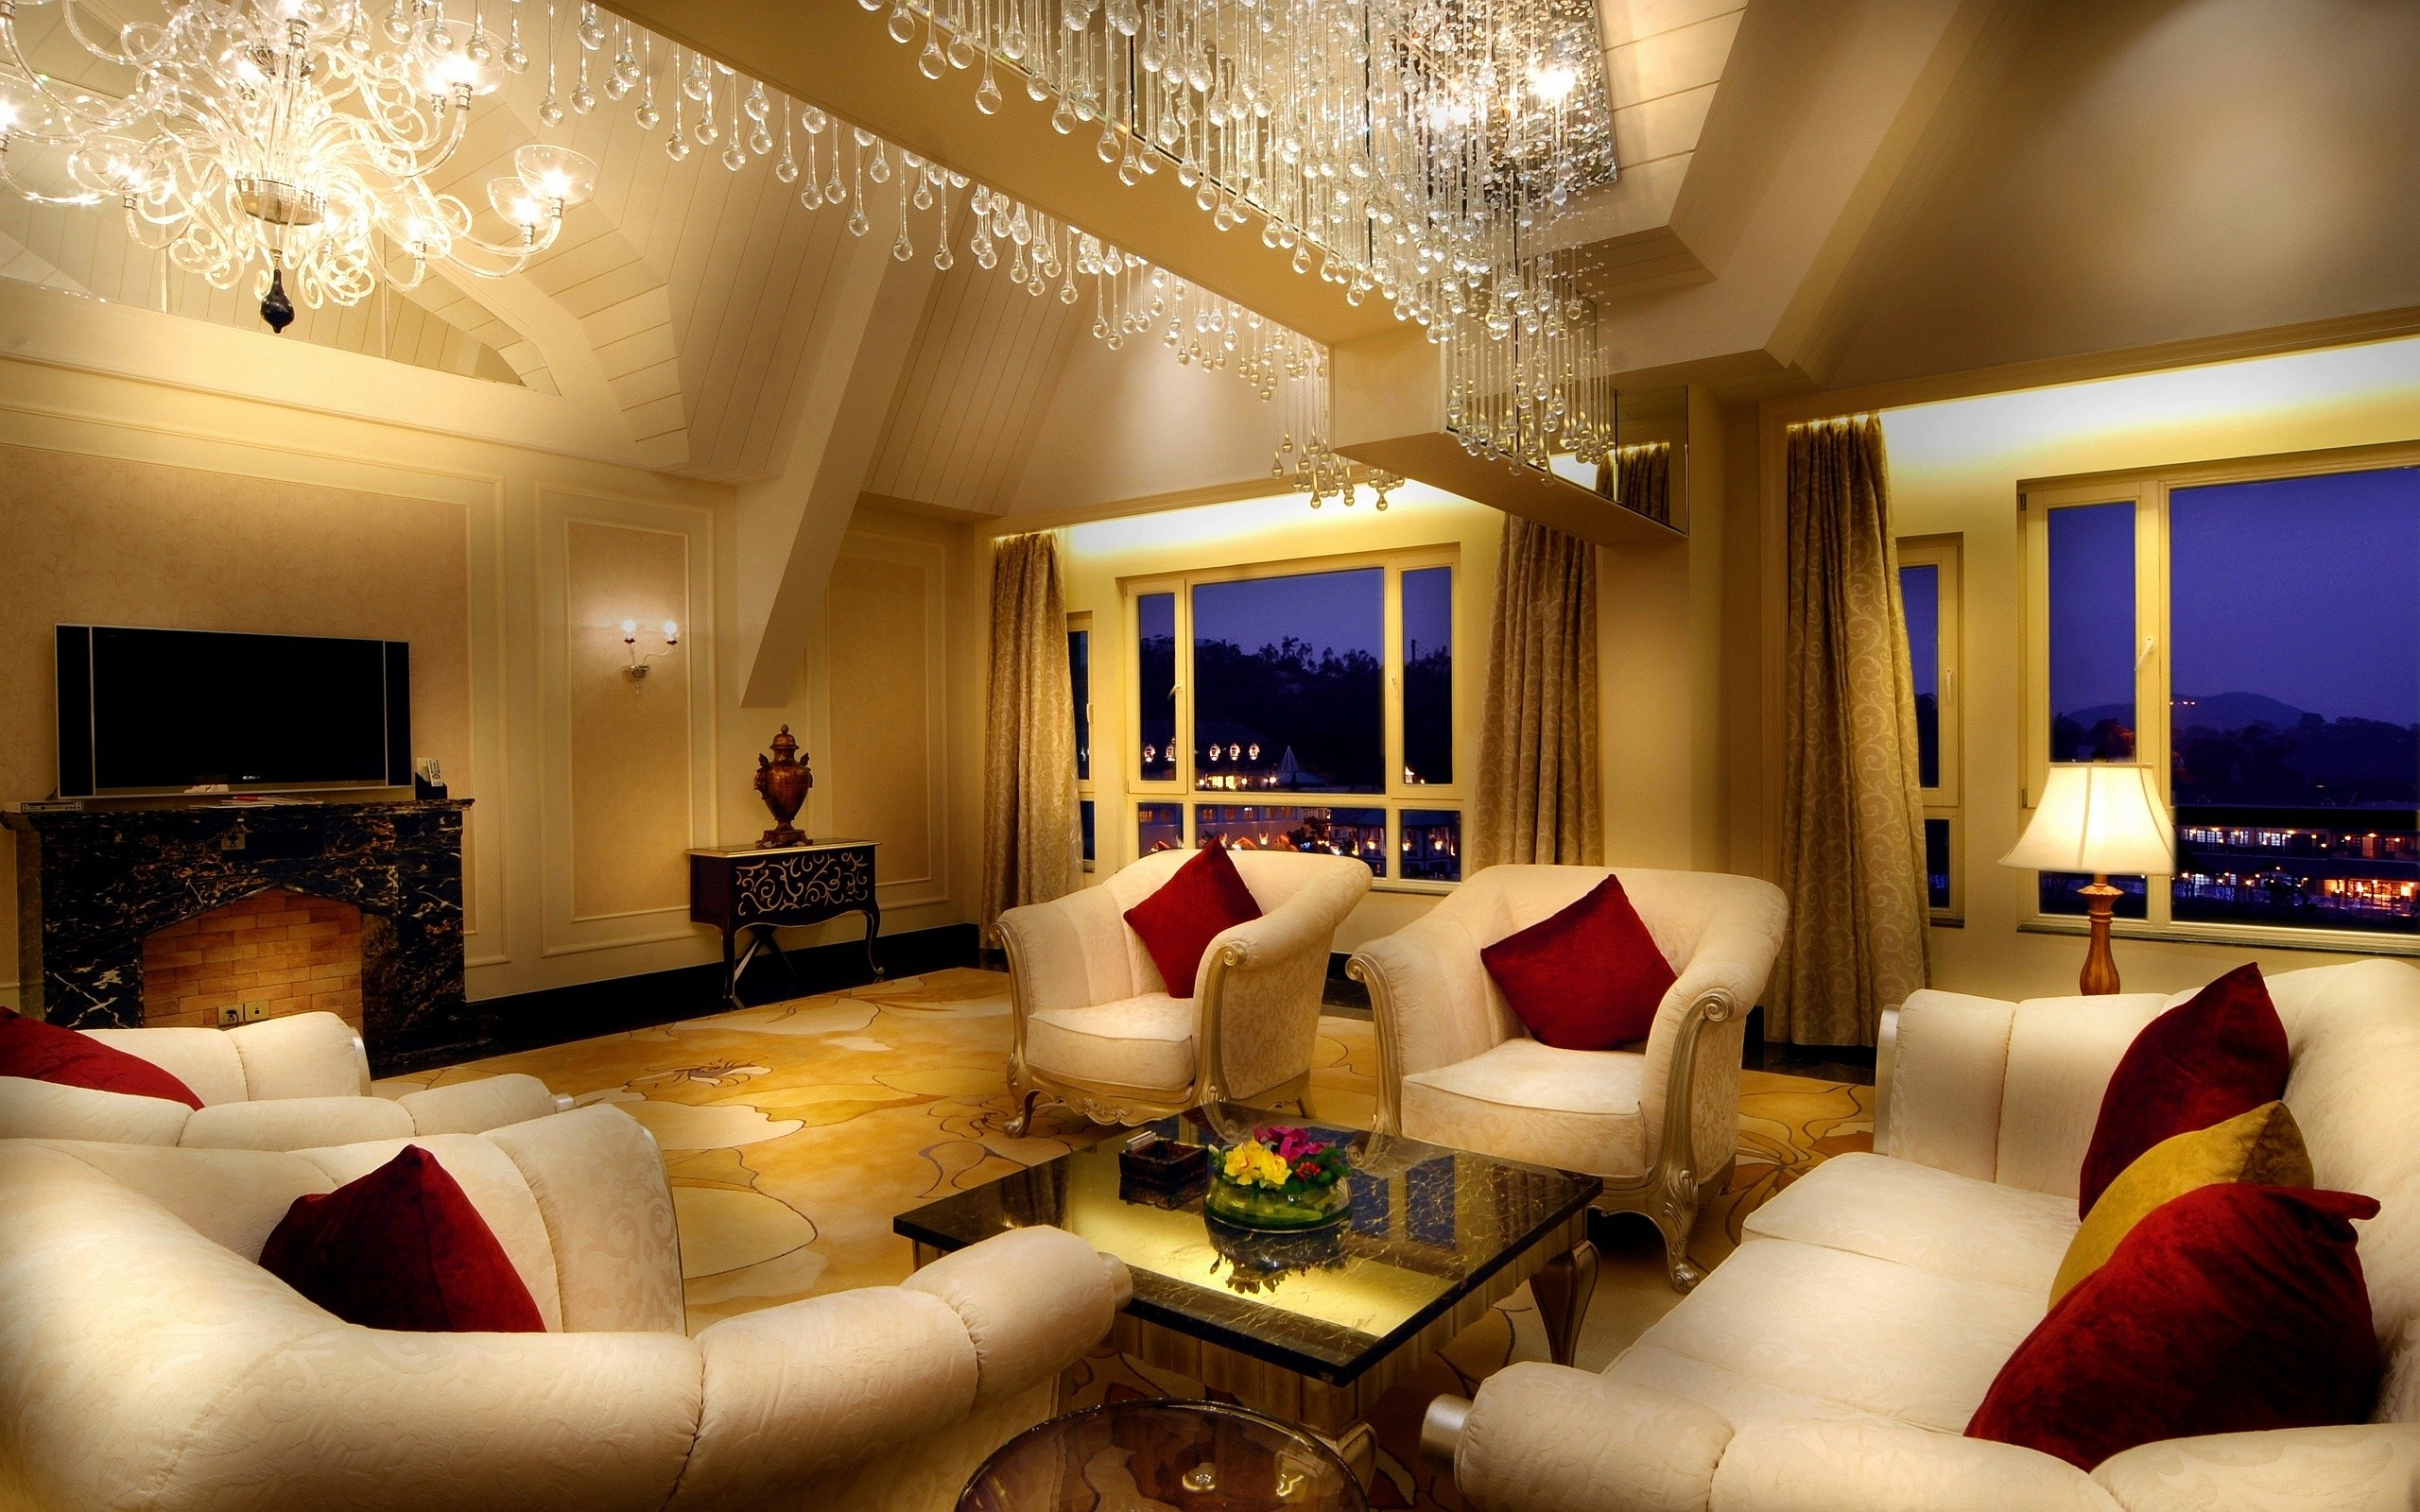 2560x1600 Room wallpapers luxury